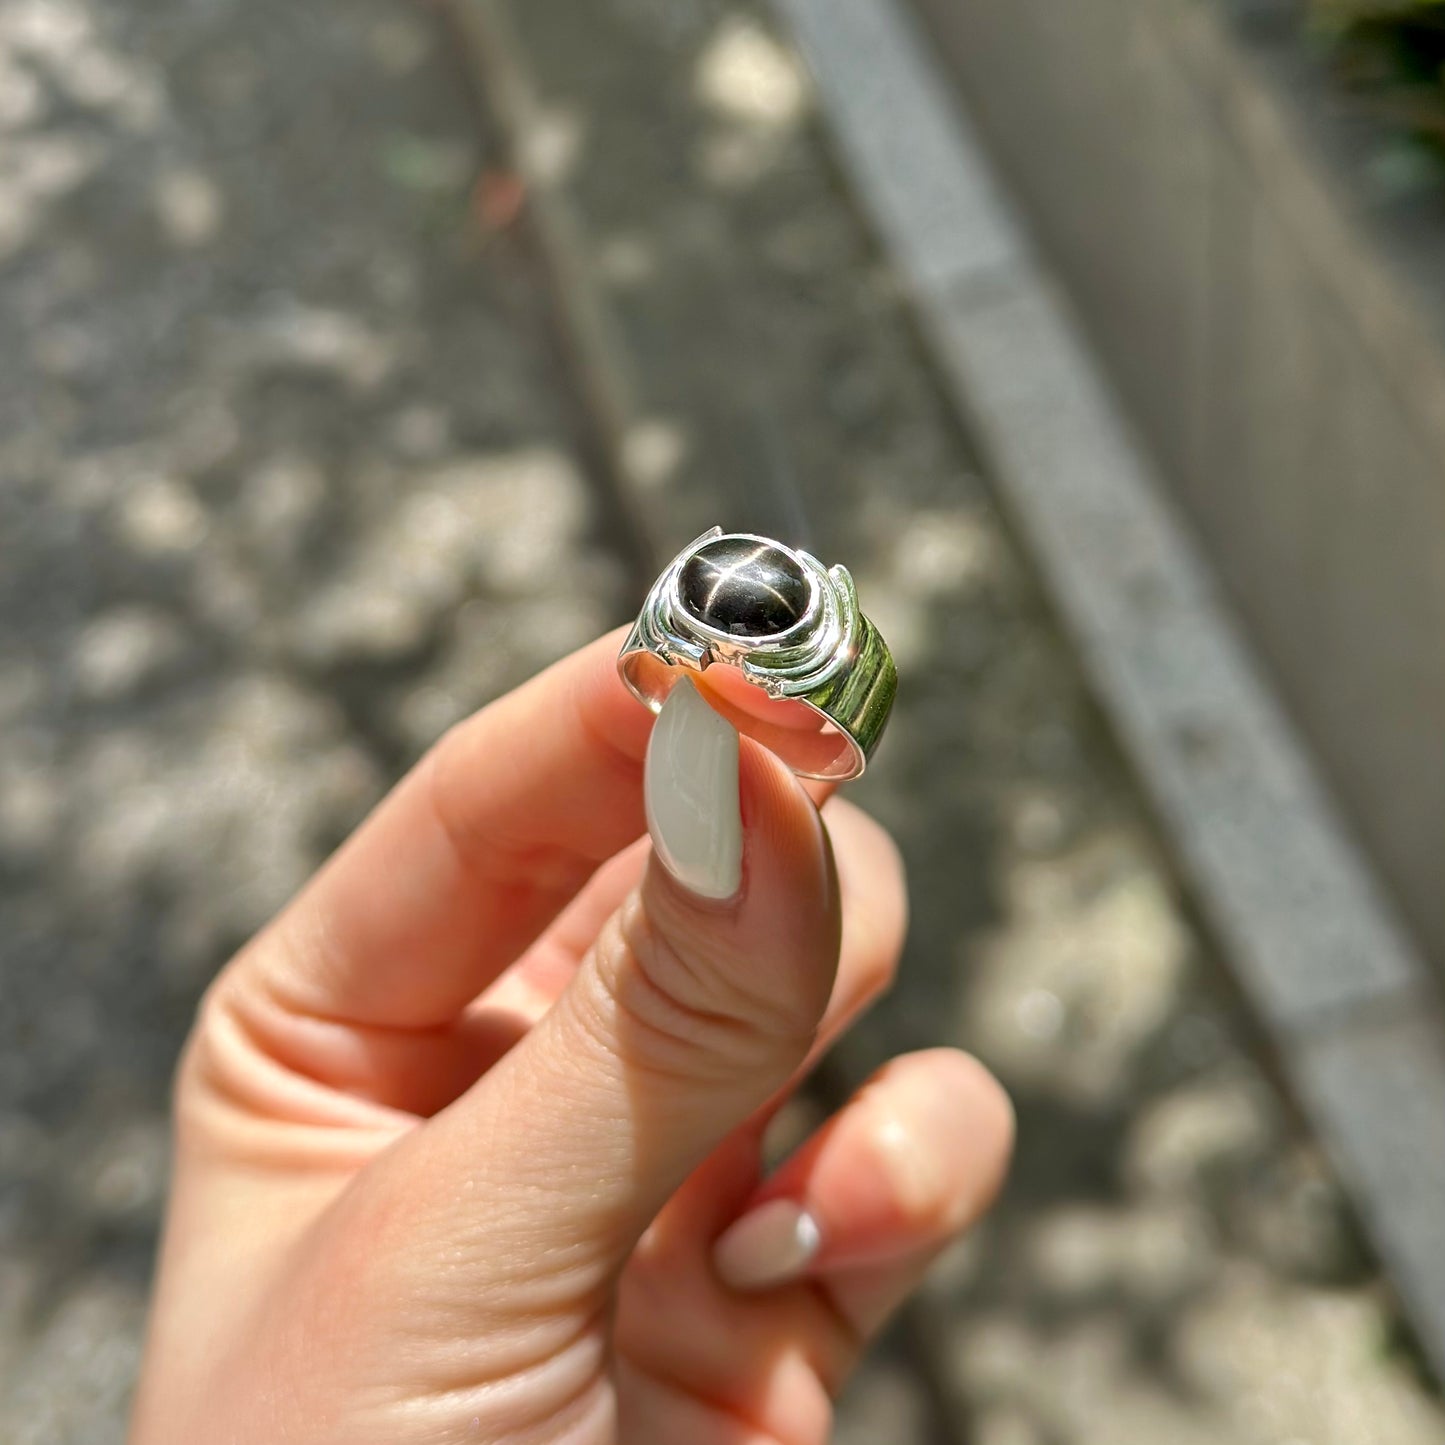 Nagoya limited ring